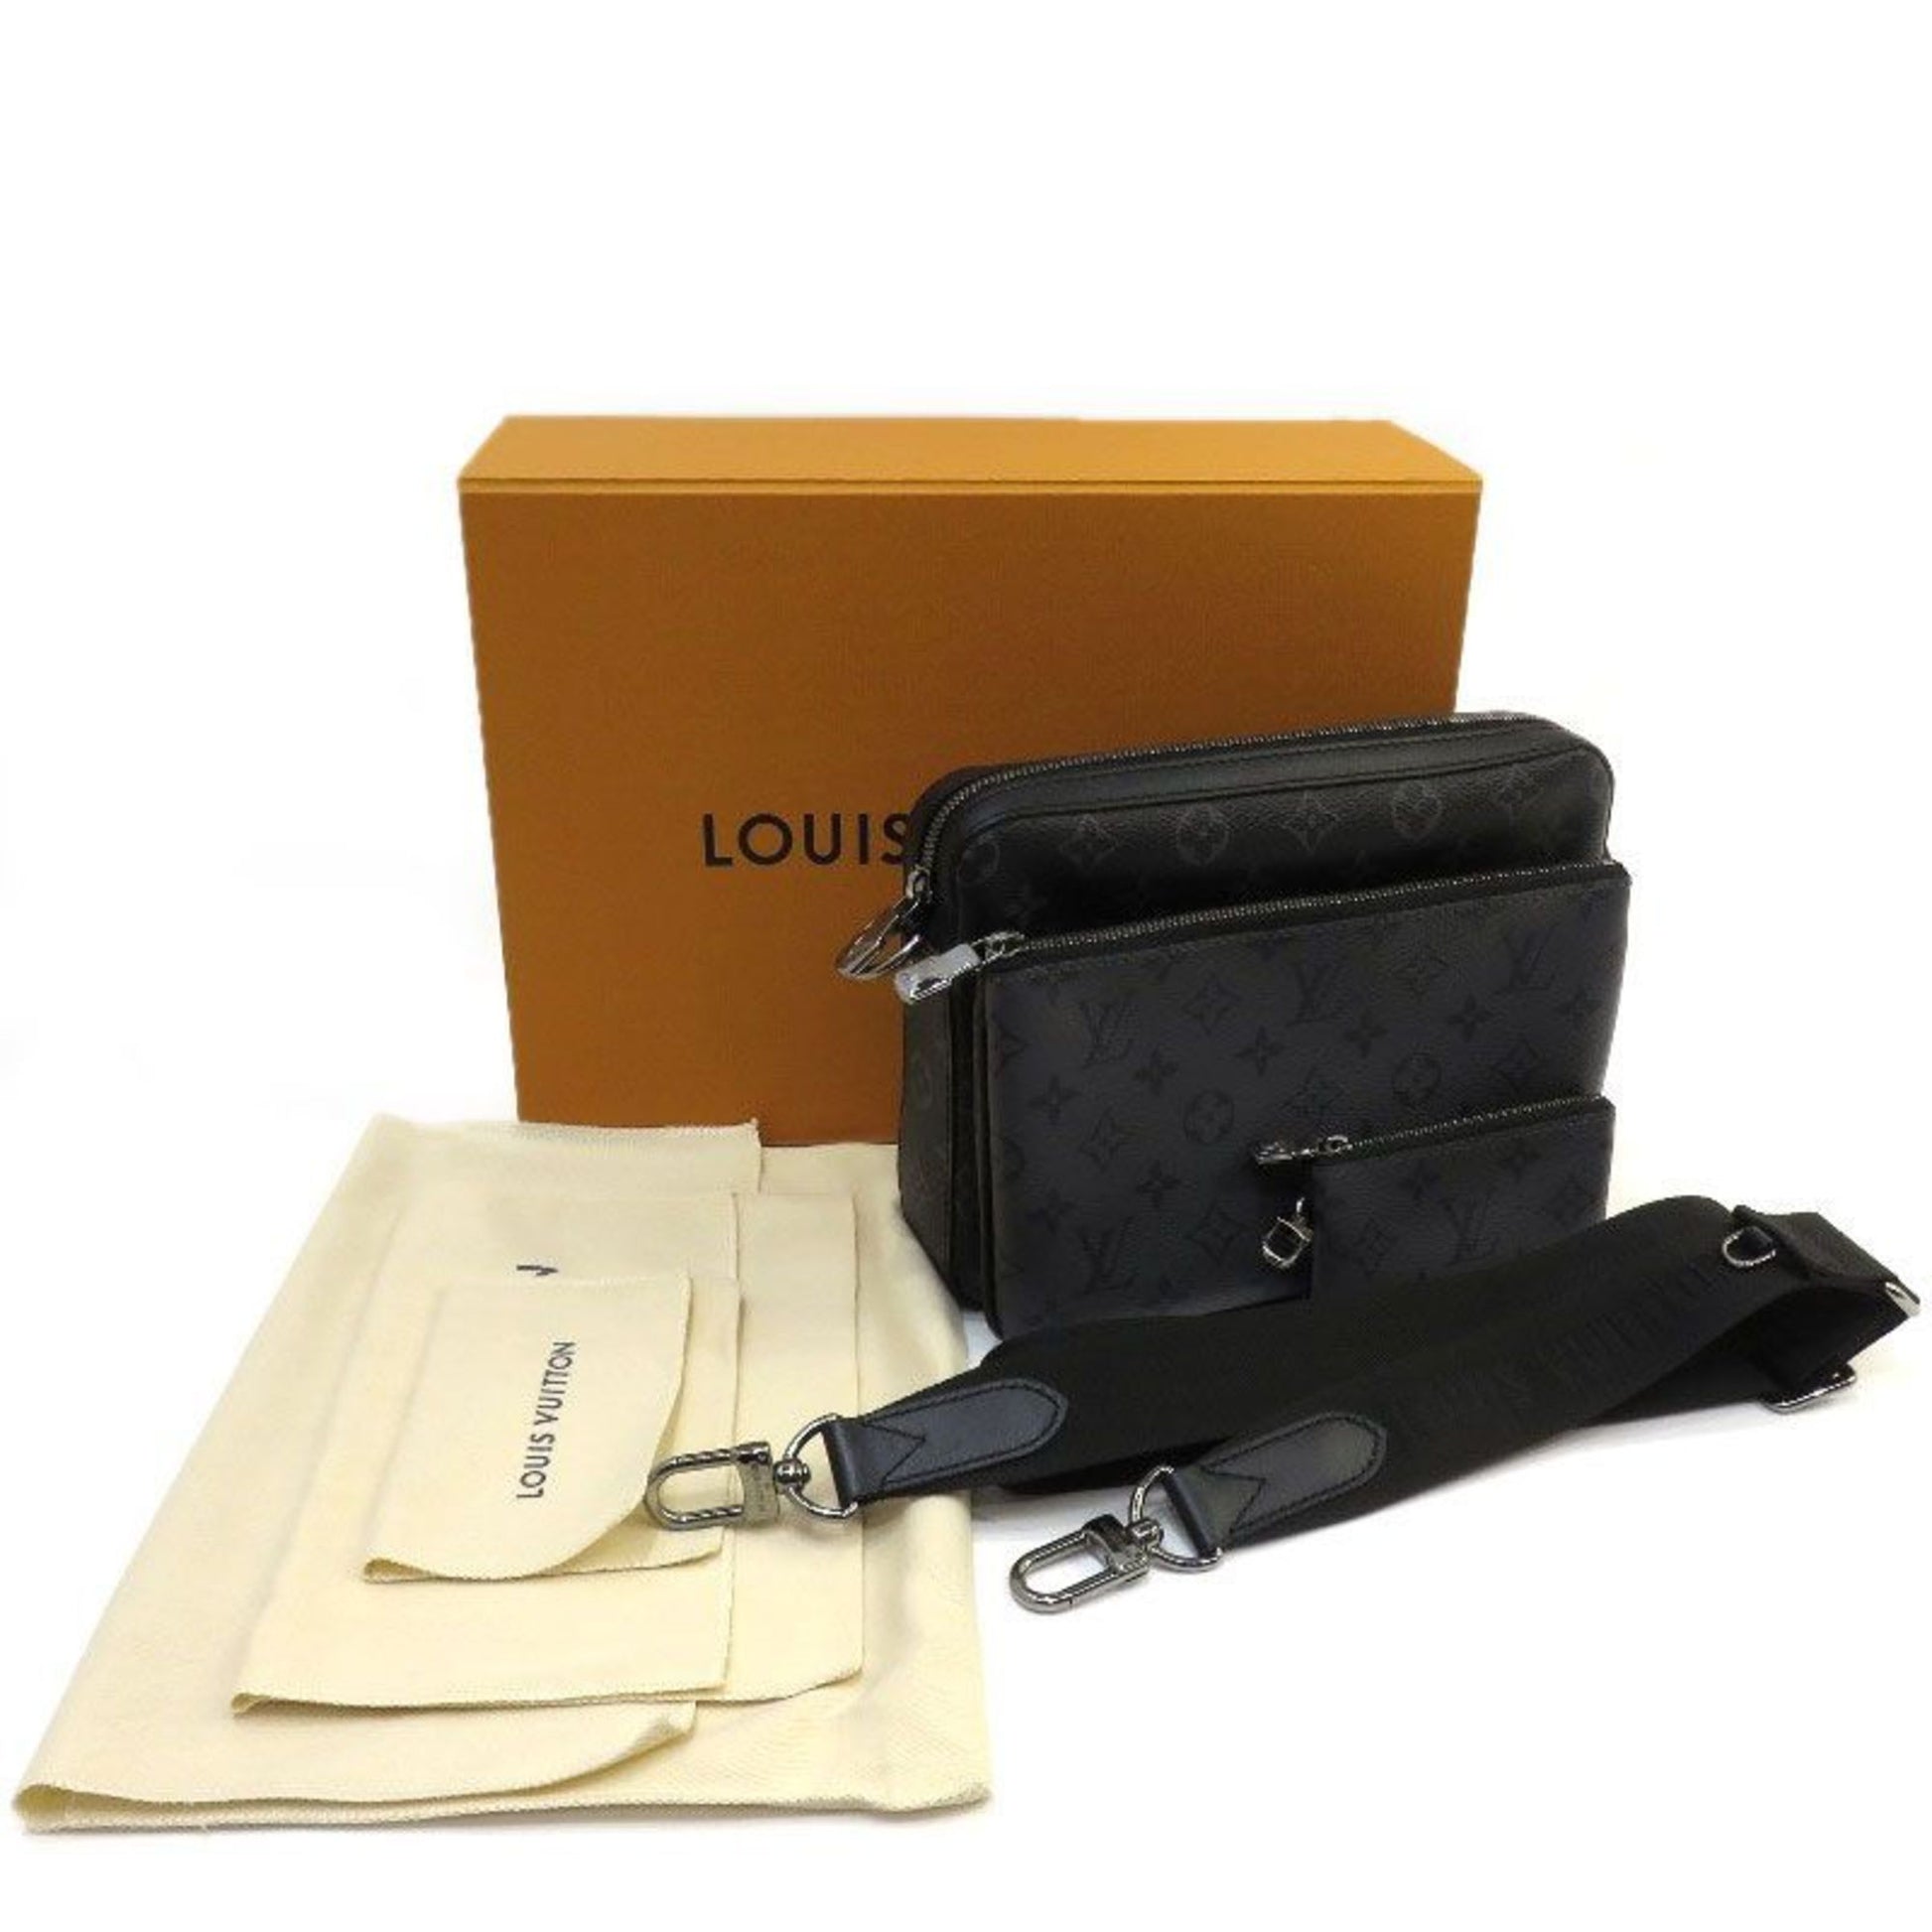 Louis Vuitton M69443 Shoulder Bag Trio Messenger Mono Eclipse Reverse O